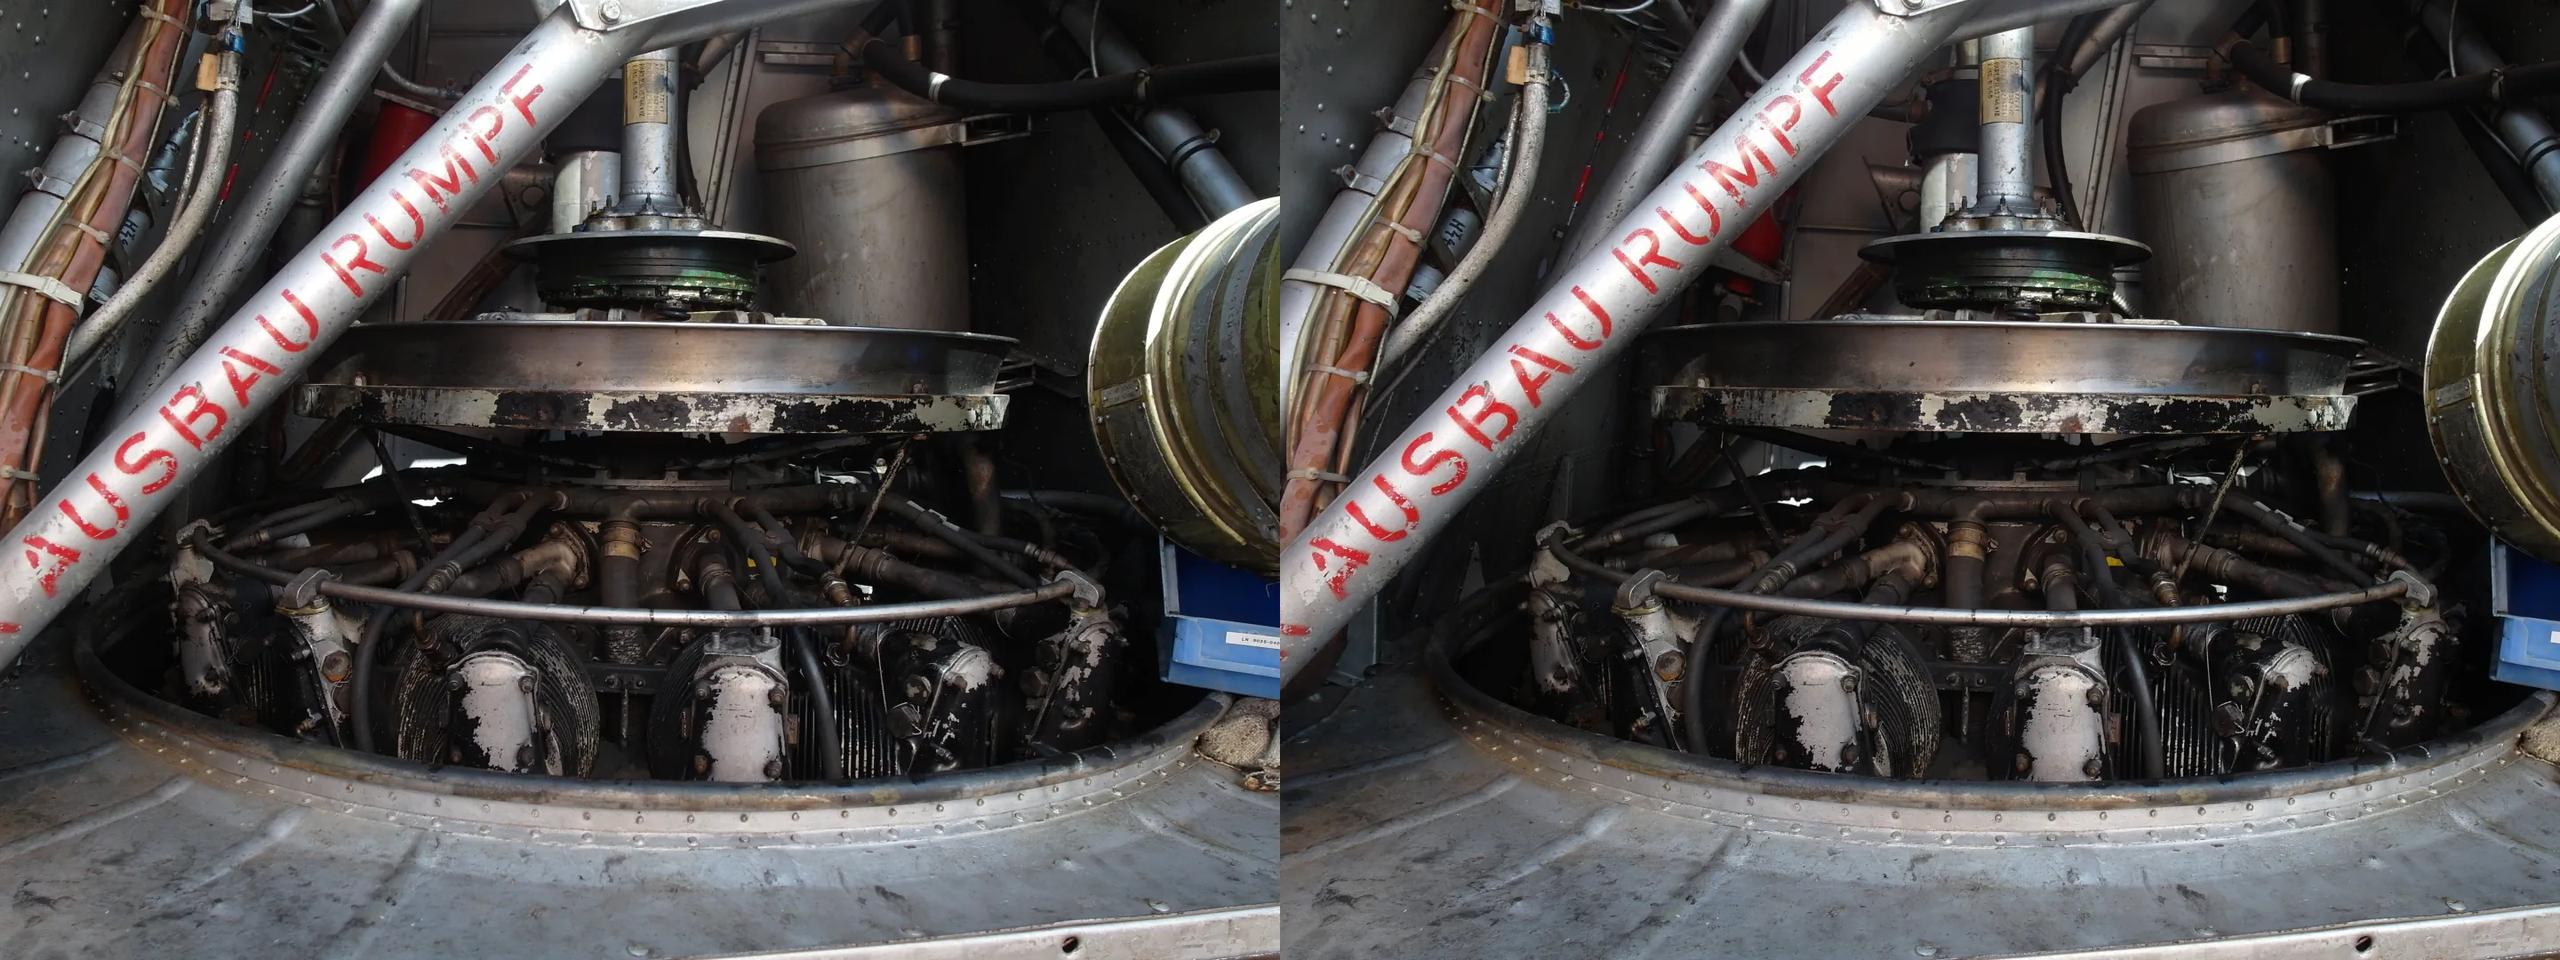 Bristol 171 Sycamore: the 9 Cylinder Engine